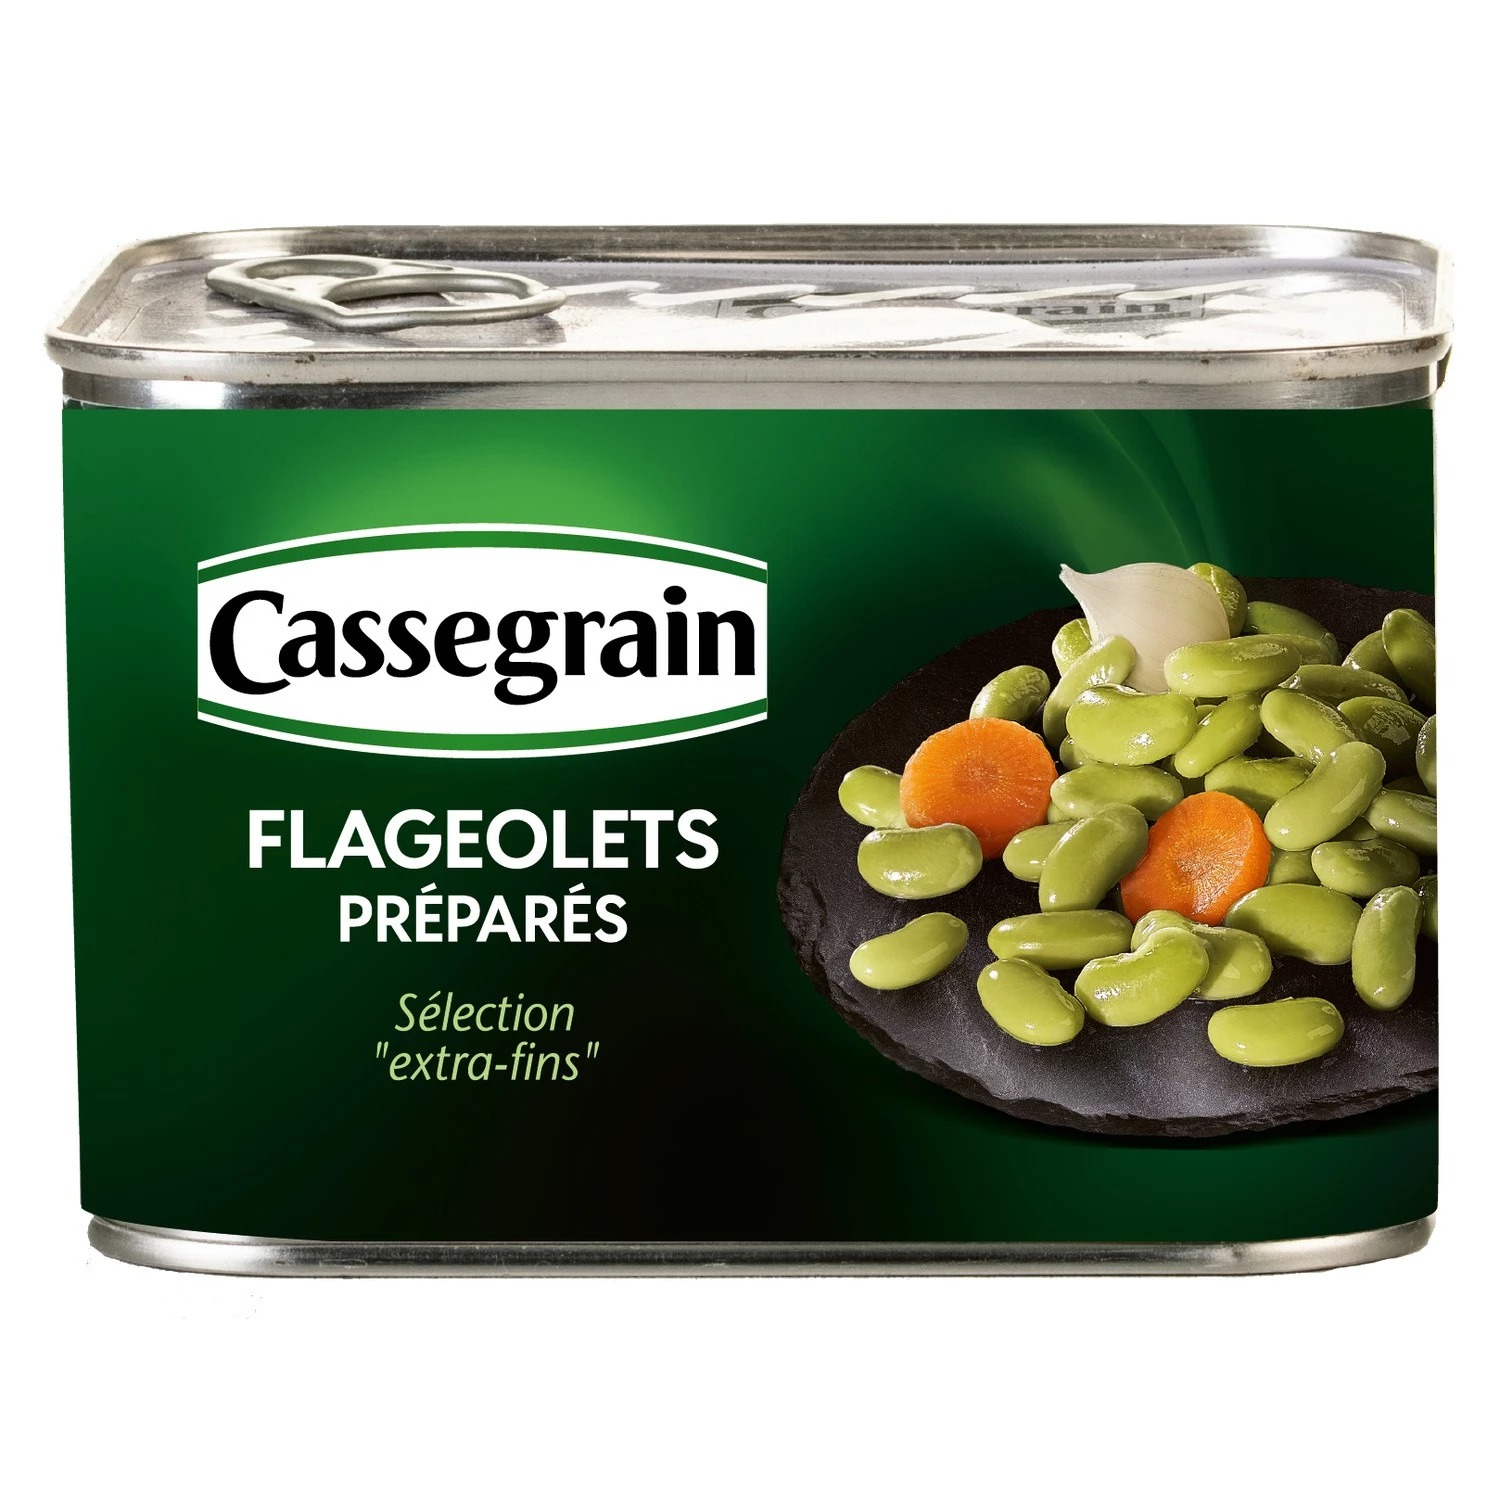 Extra fine prepared flageolets of 465g - CASSEGRAIN